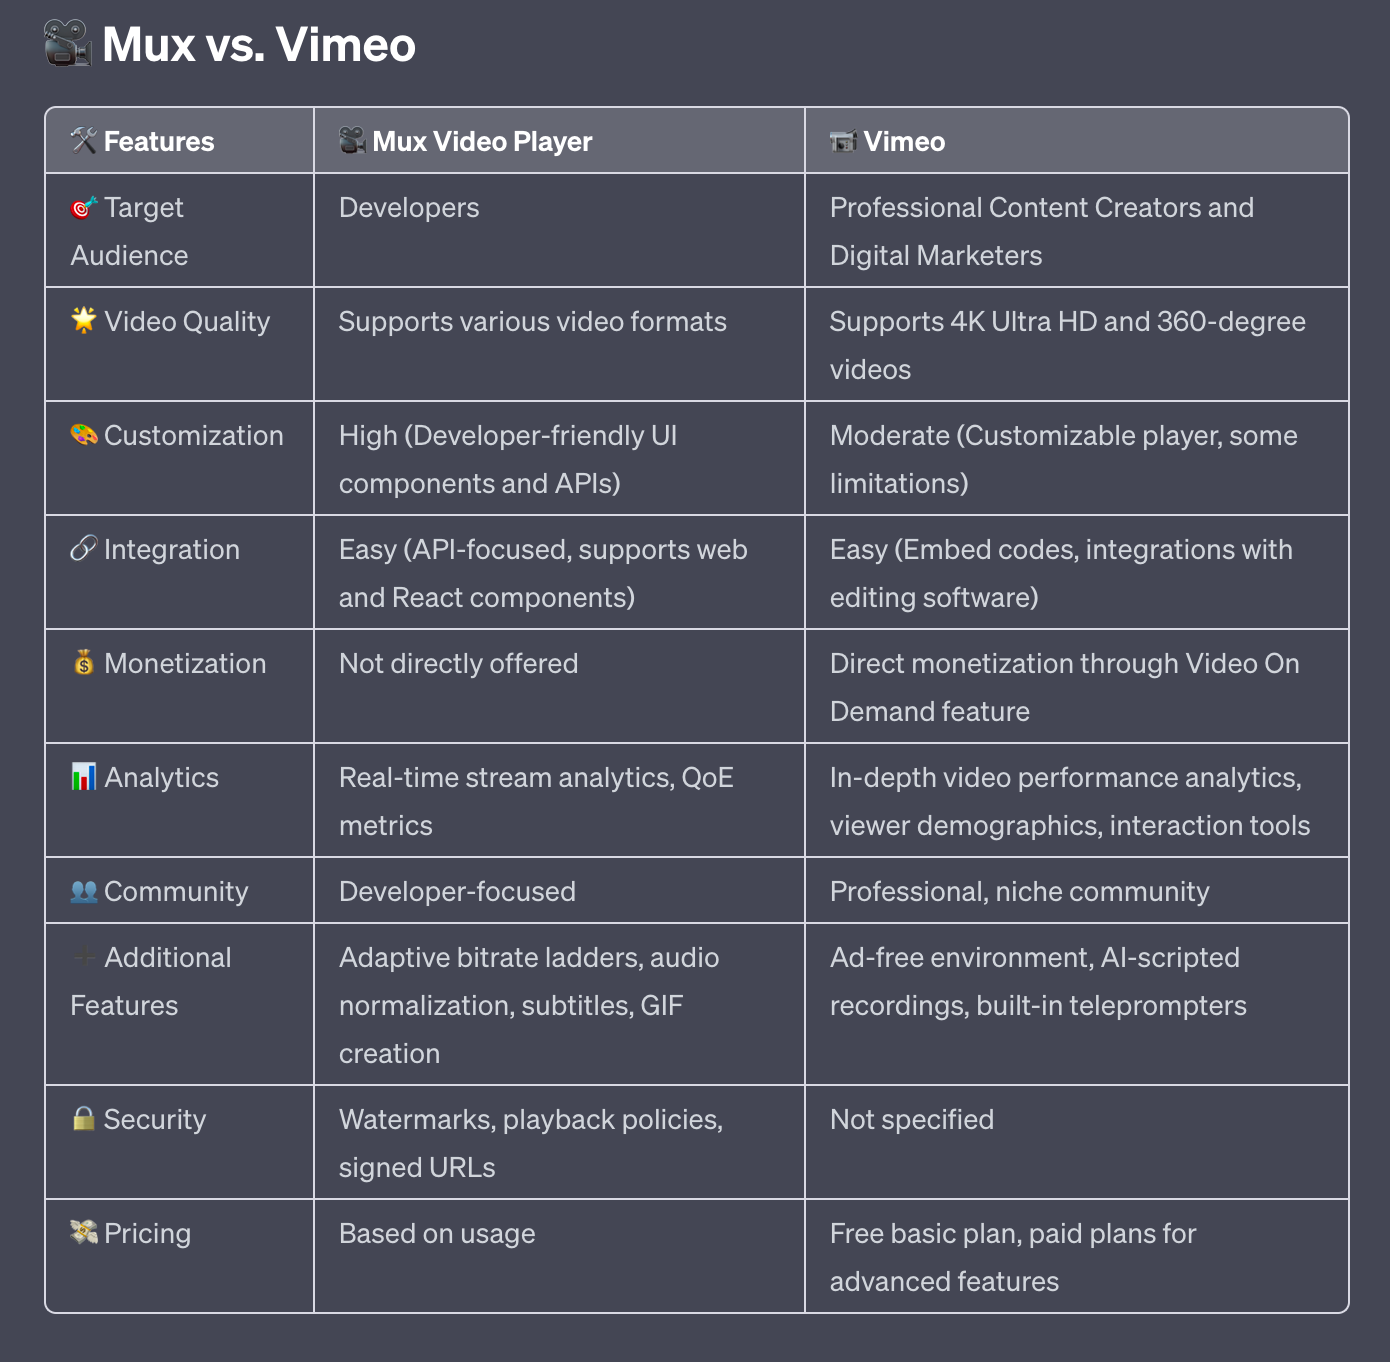 Summary comparison of Mux vs. Vimeo features. 